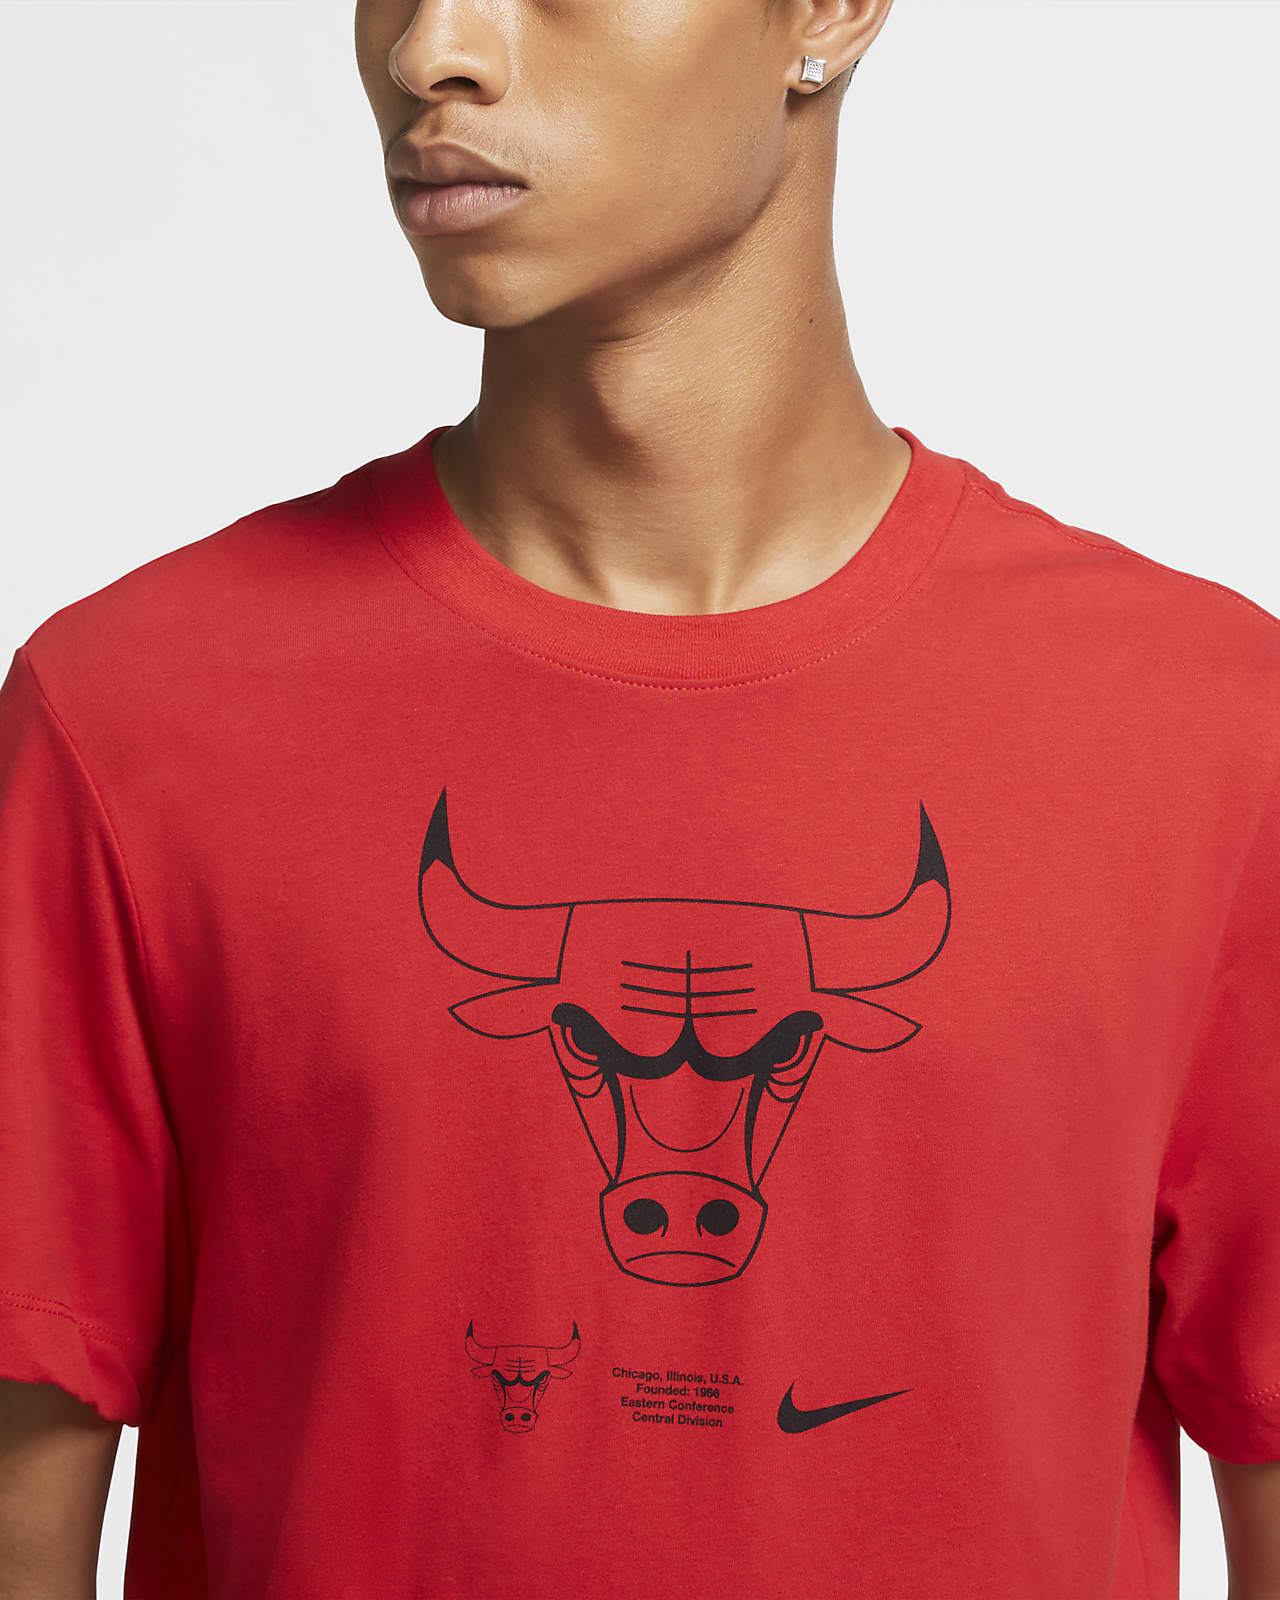 nike bulls t shirt